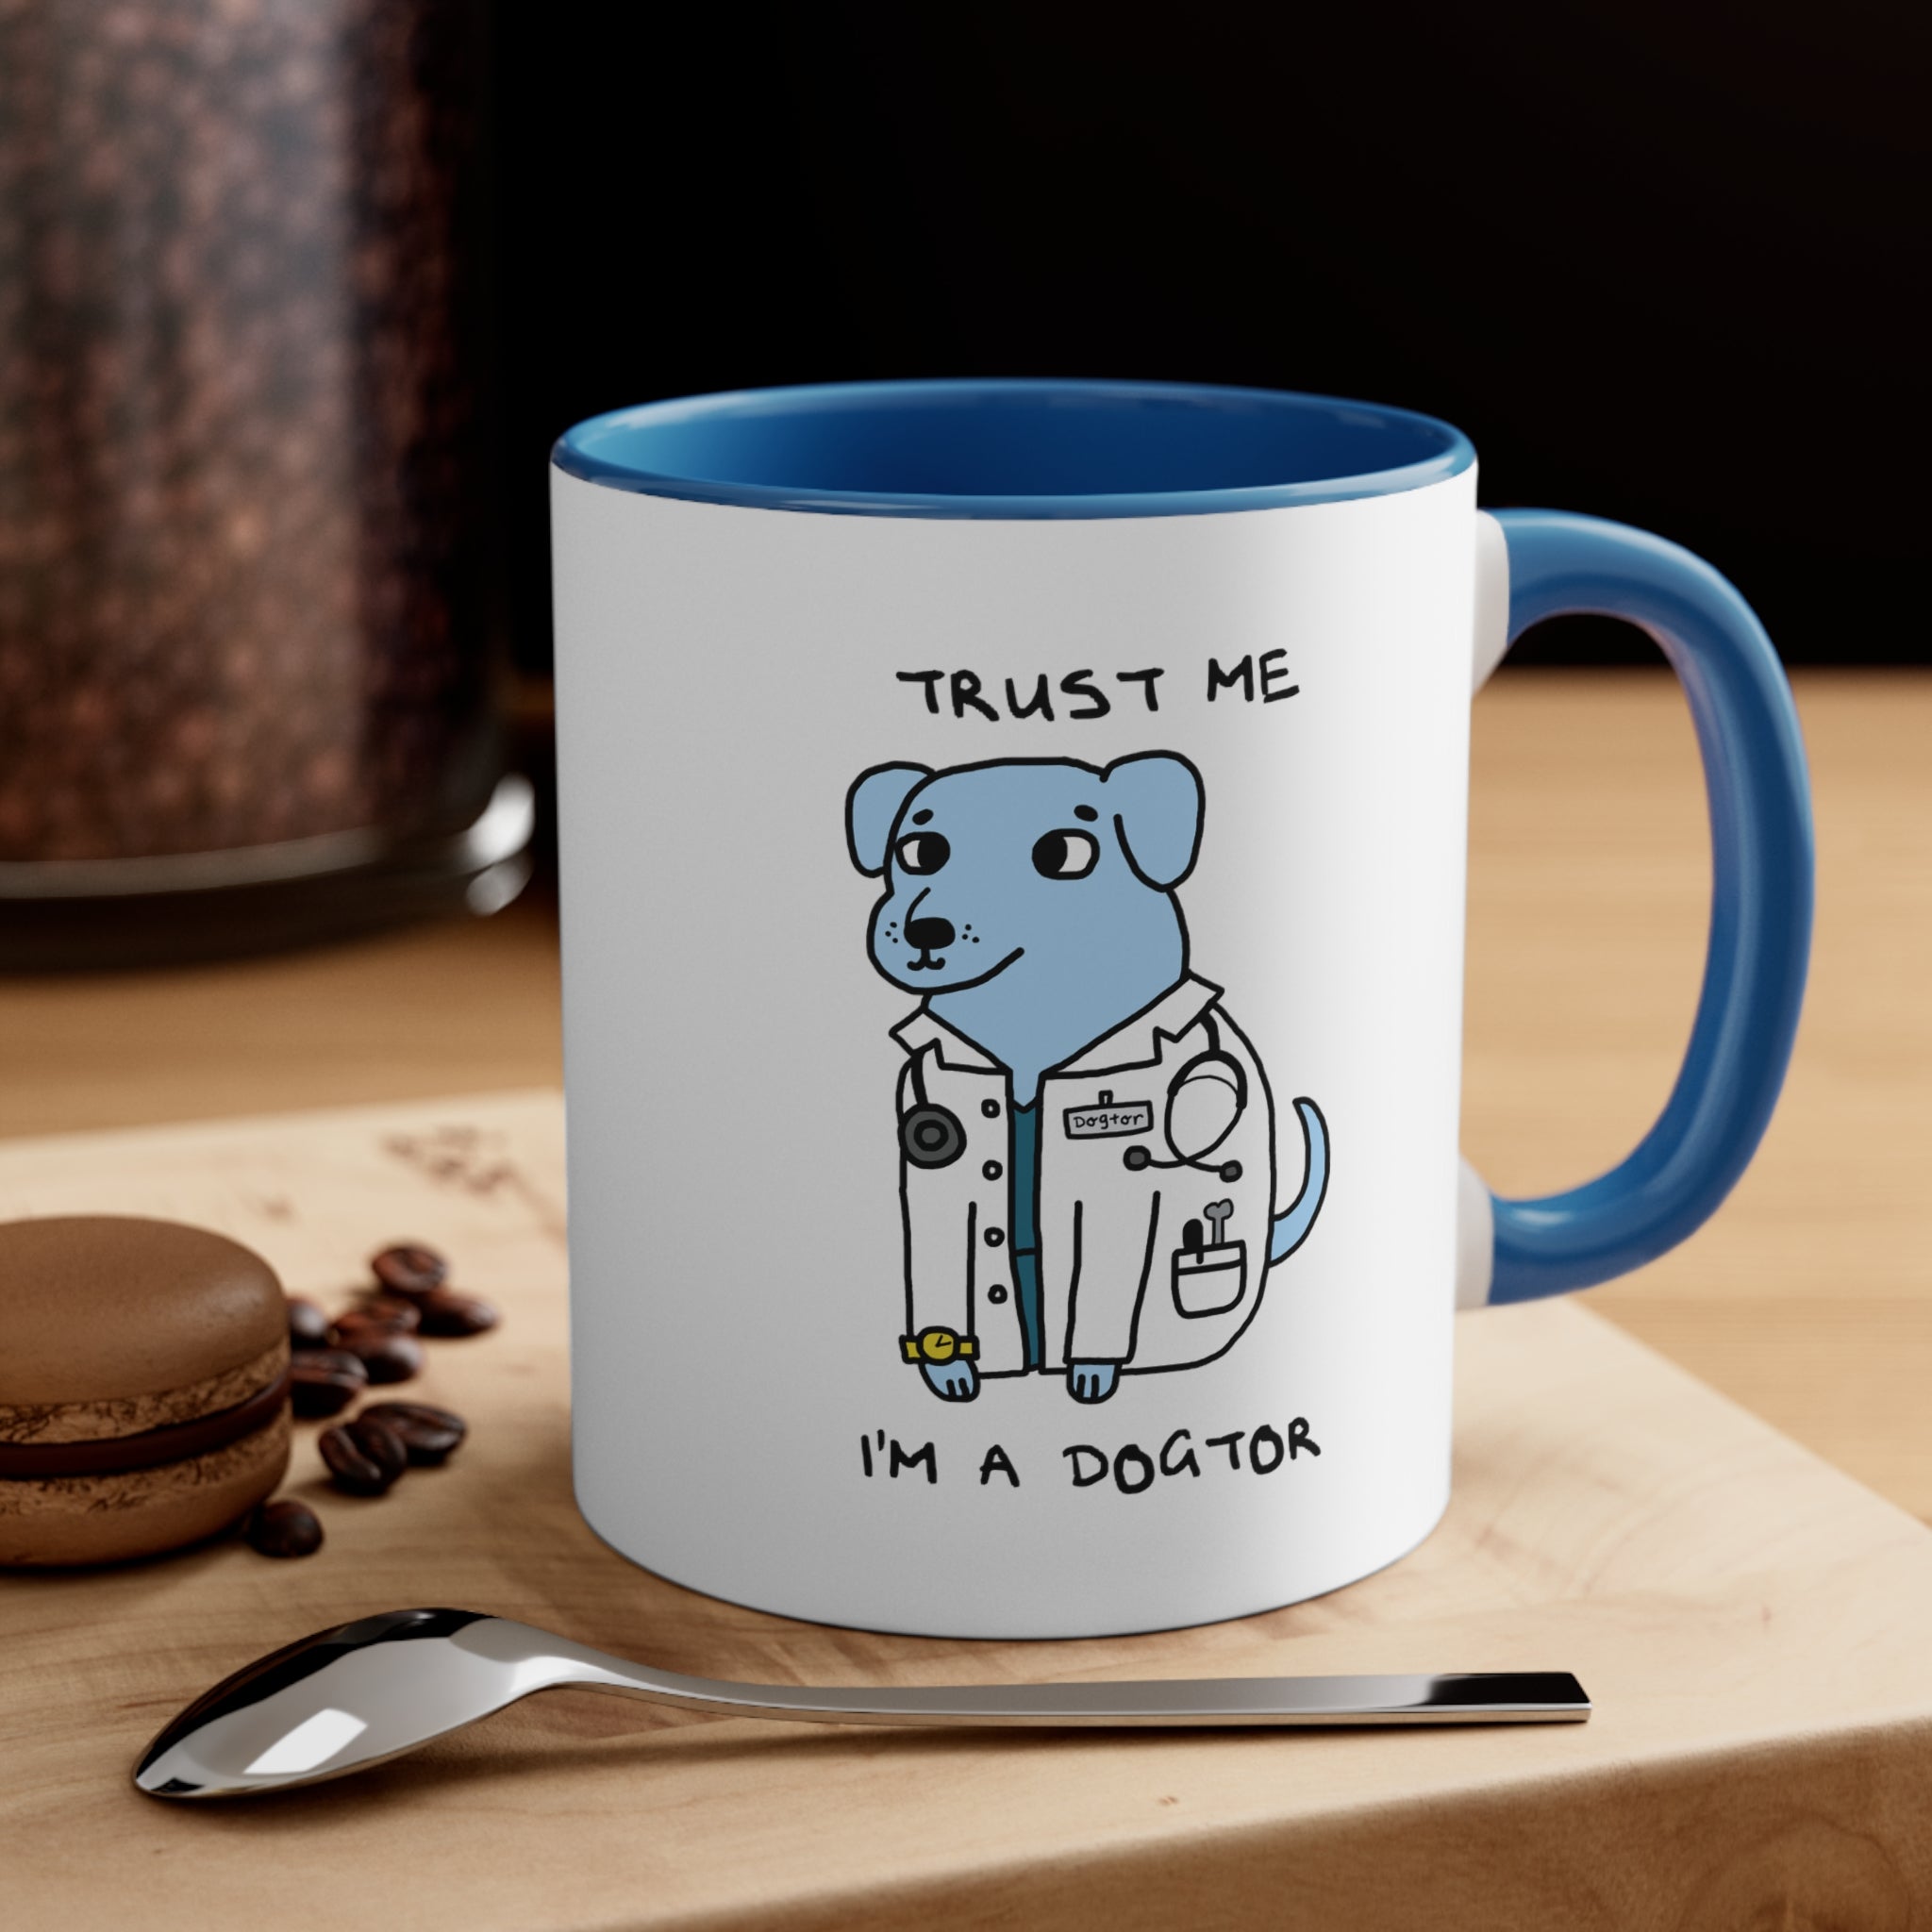 Trust me, I'm a Dogtor Accent Coffee Mug, 11oz